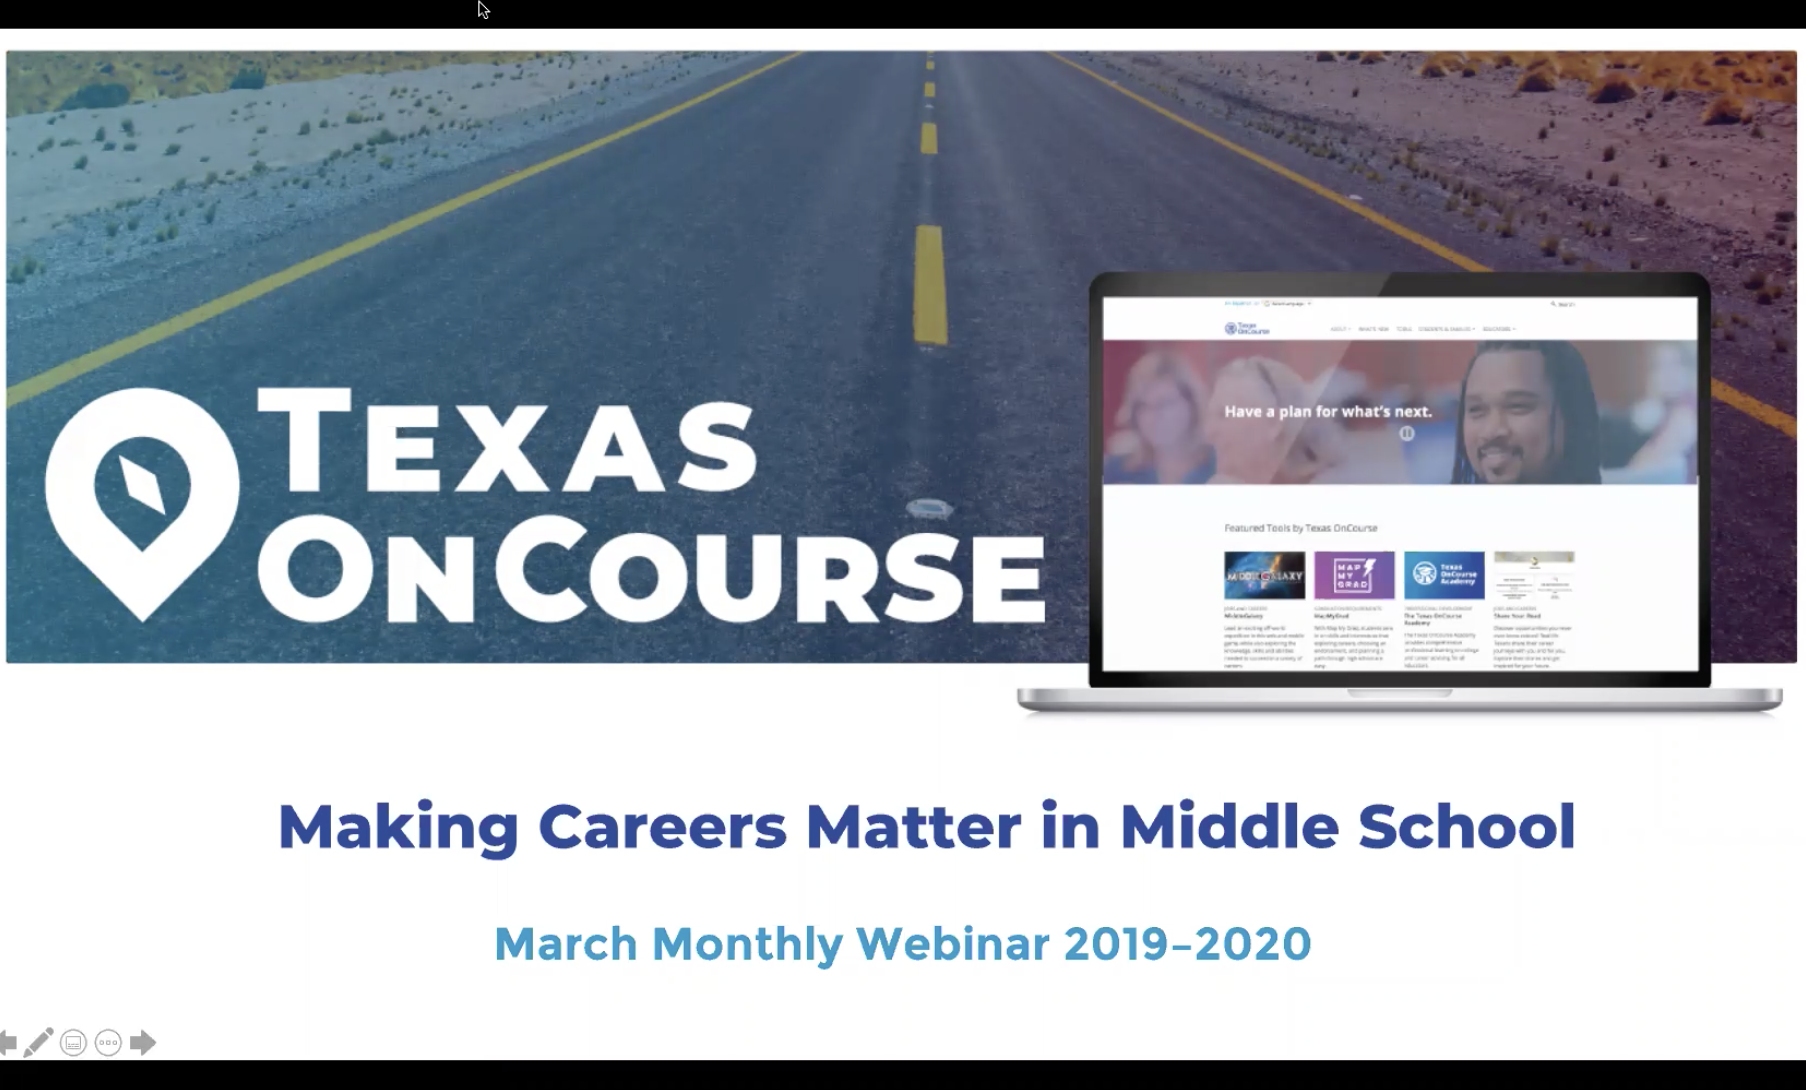 Webinar titled making careers matter in middle school